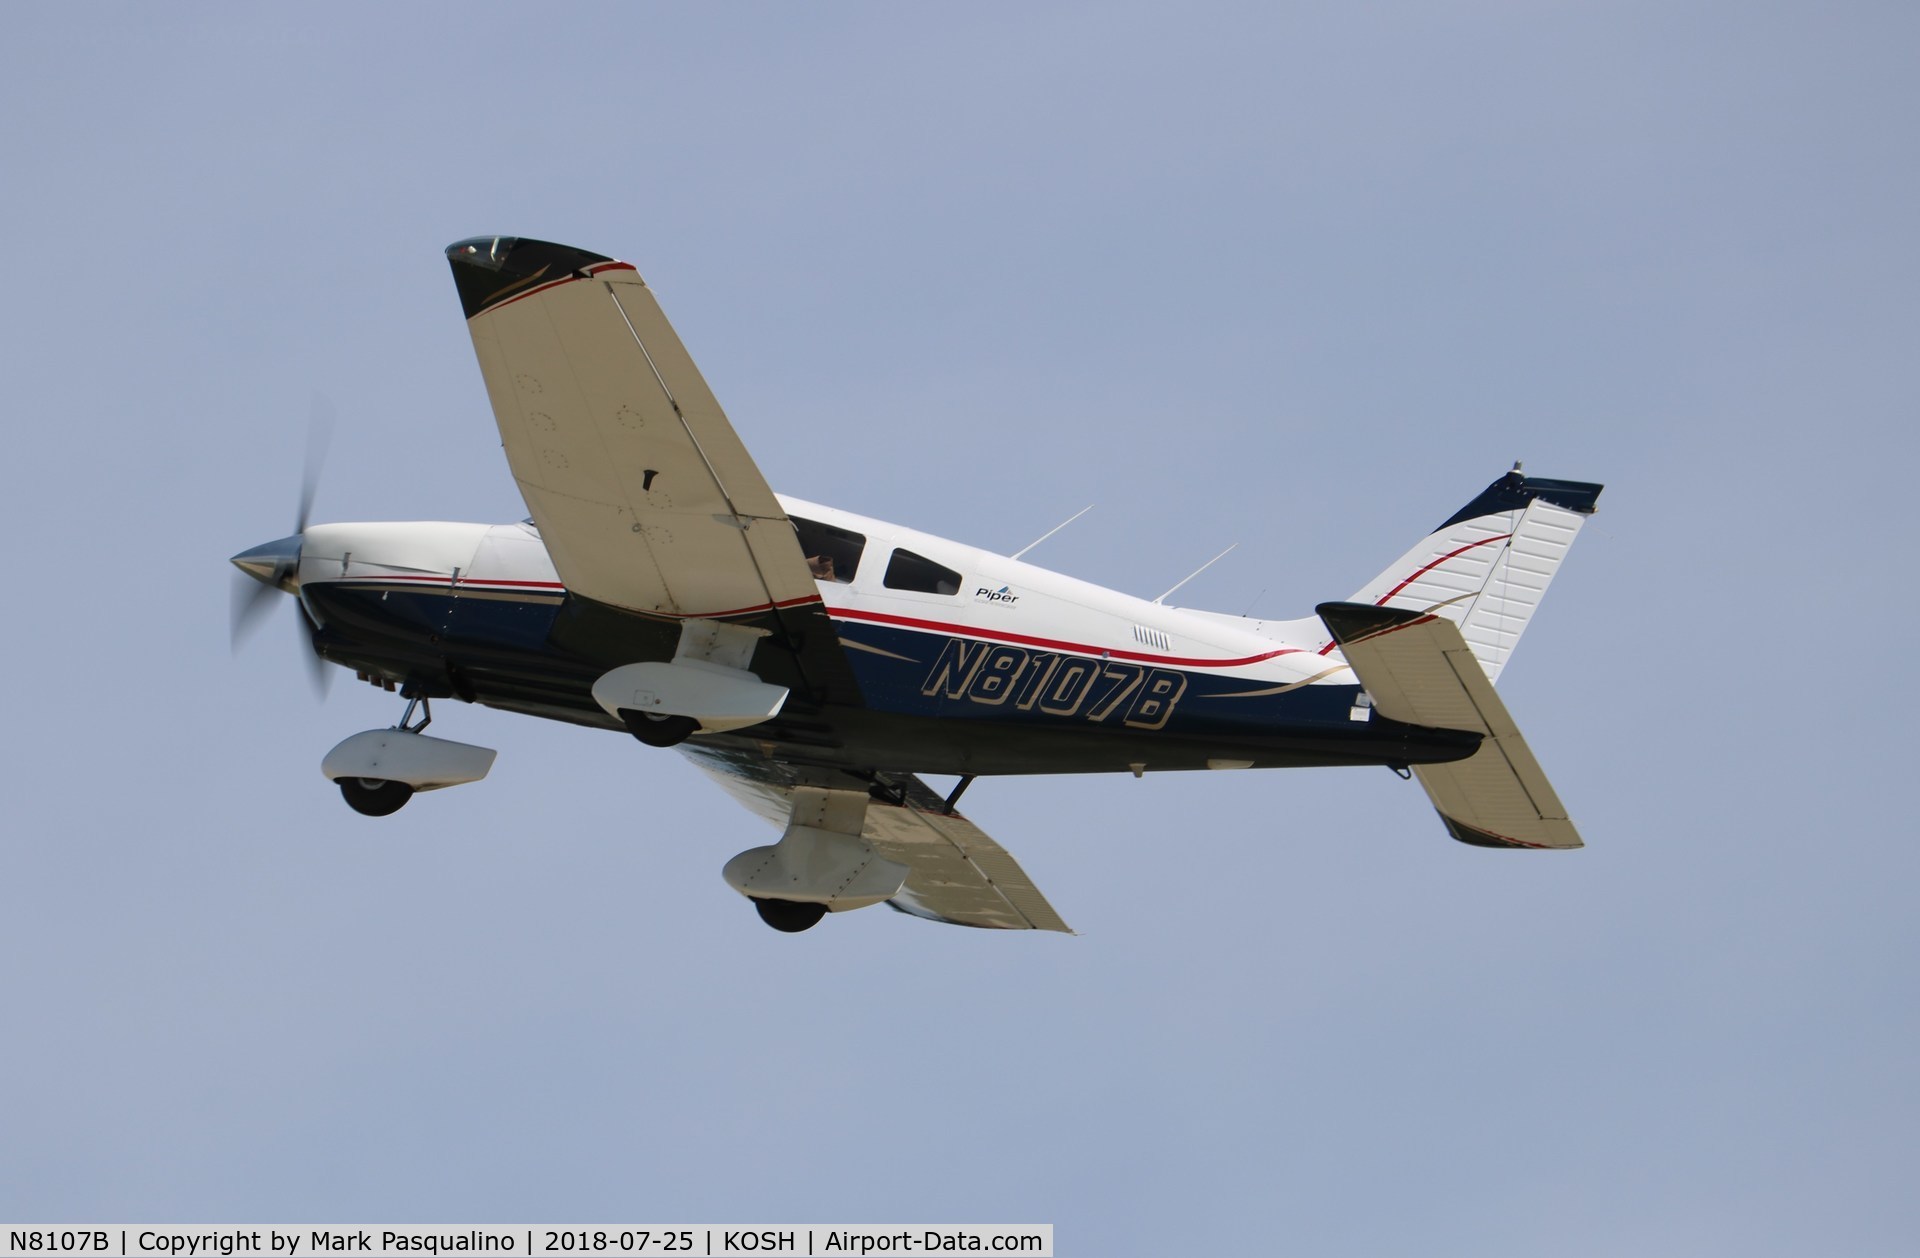 N8107B, 1979 Piper PA-28-236 Dakota C/N 28-8011013, Piper PA-28-236